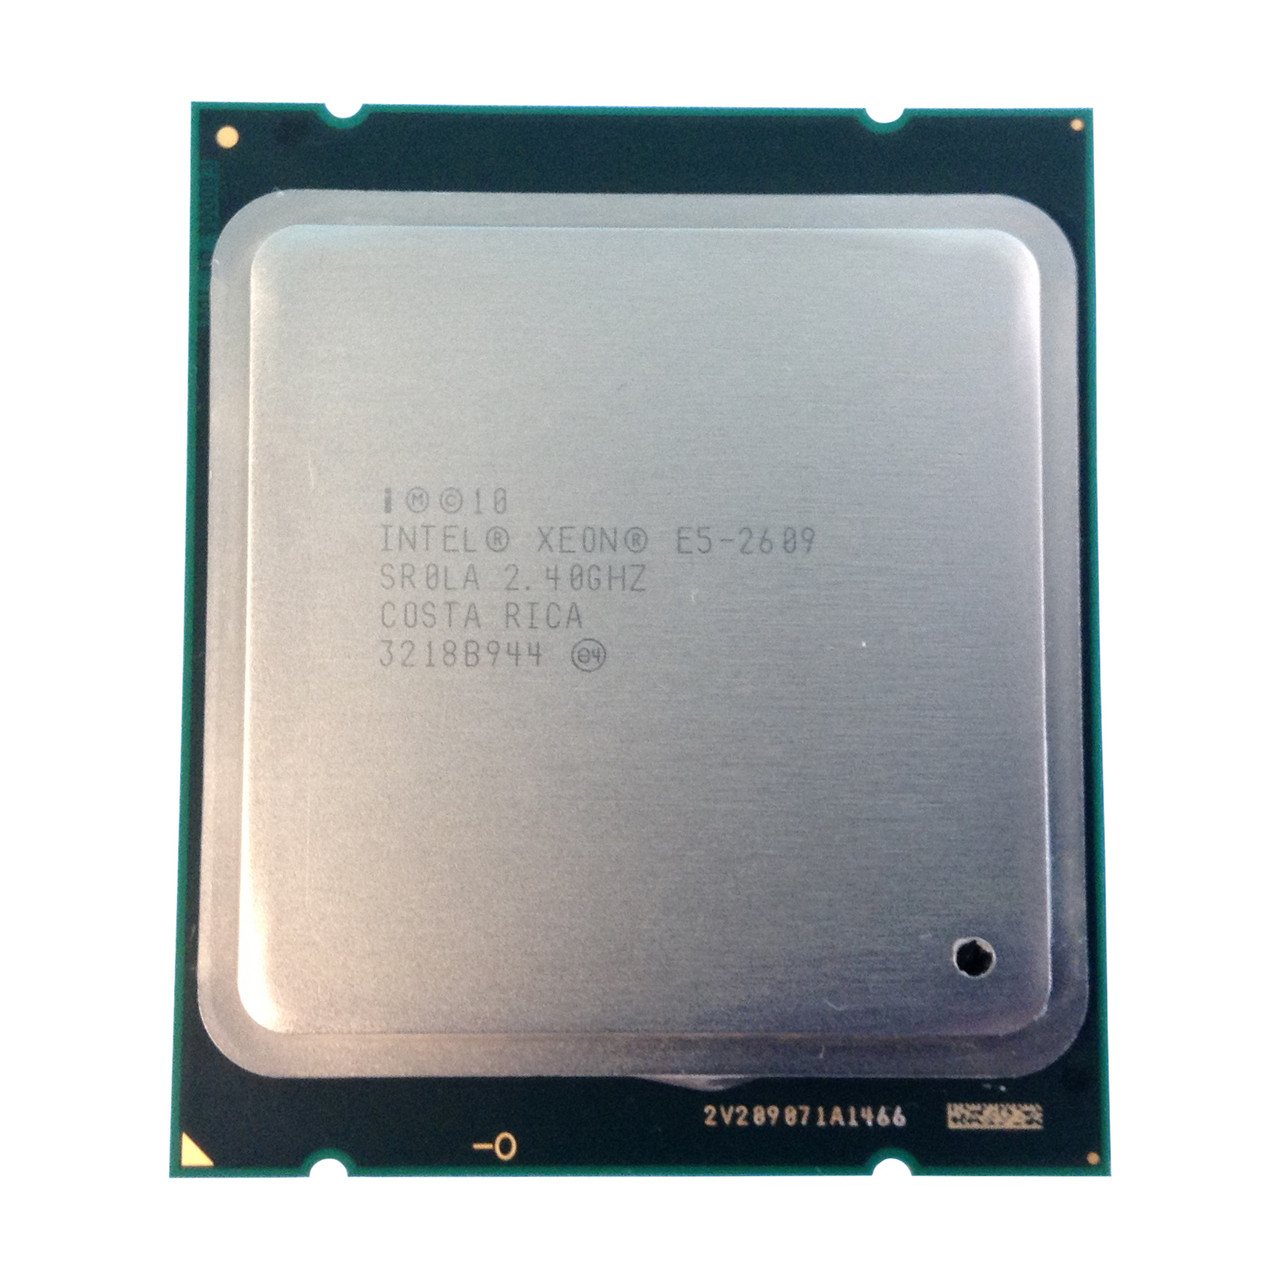 Intel SR0LA Xeon E5-2609 QC 2.4Ghz 10MB 6.4GTs Processor